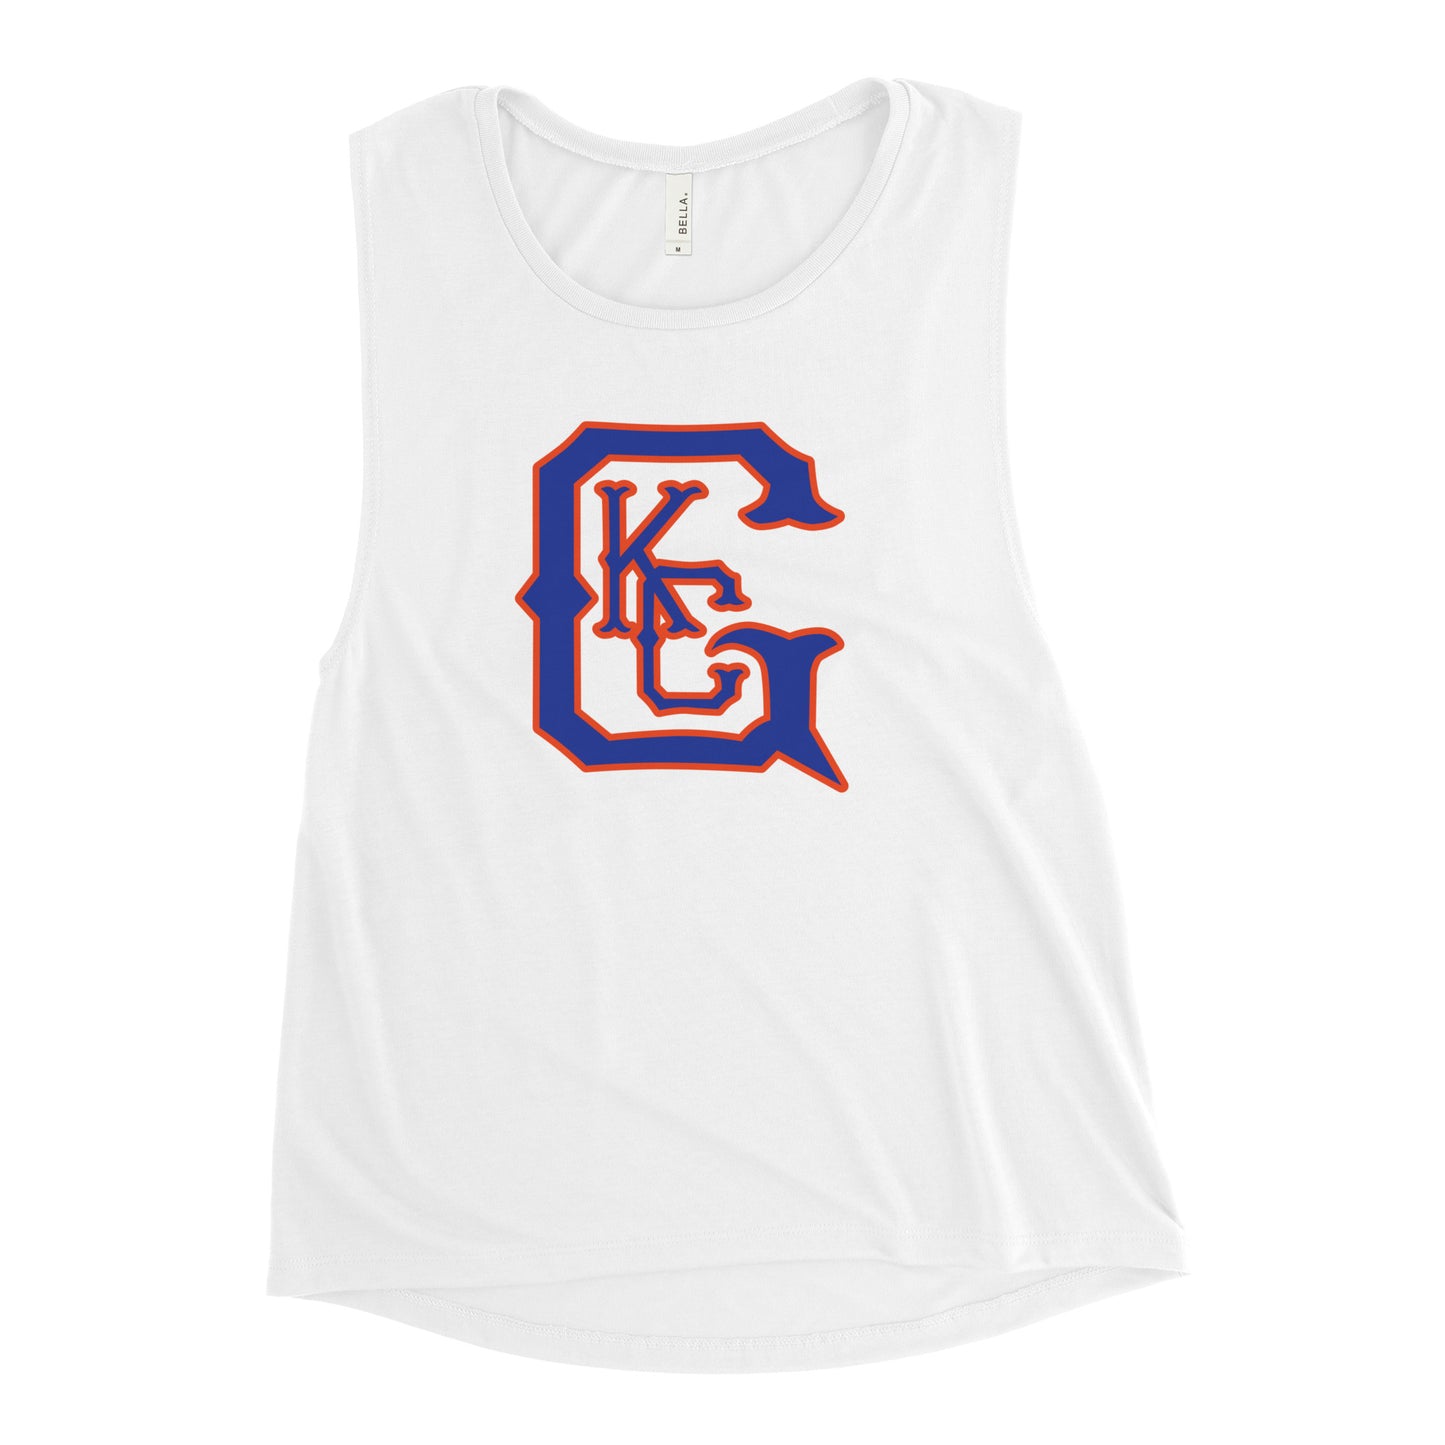 Gators Baseball KCG Ladies’ Muscle Tank